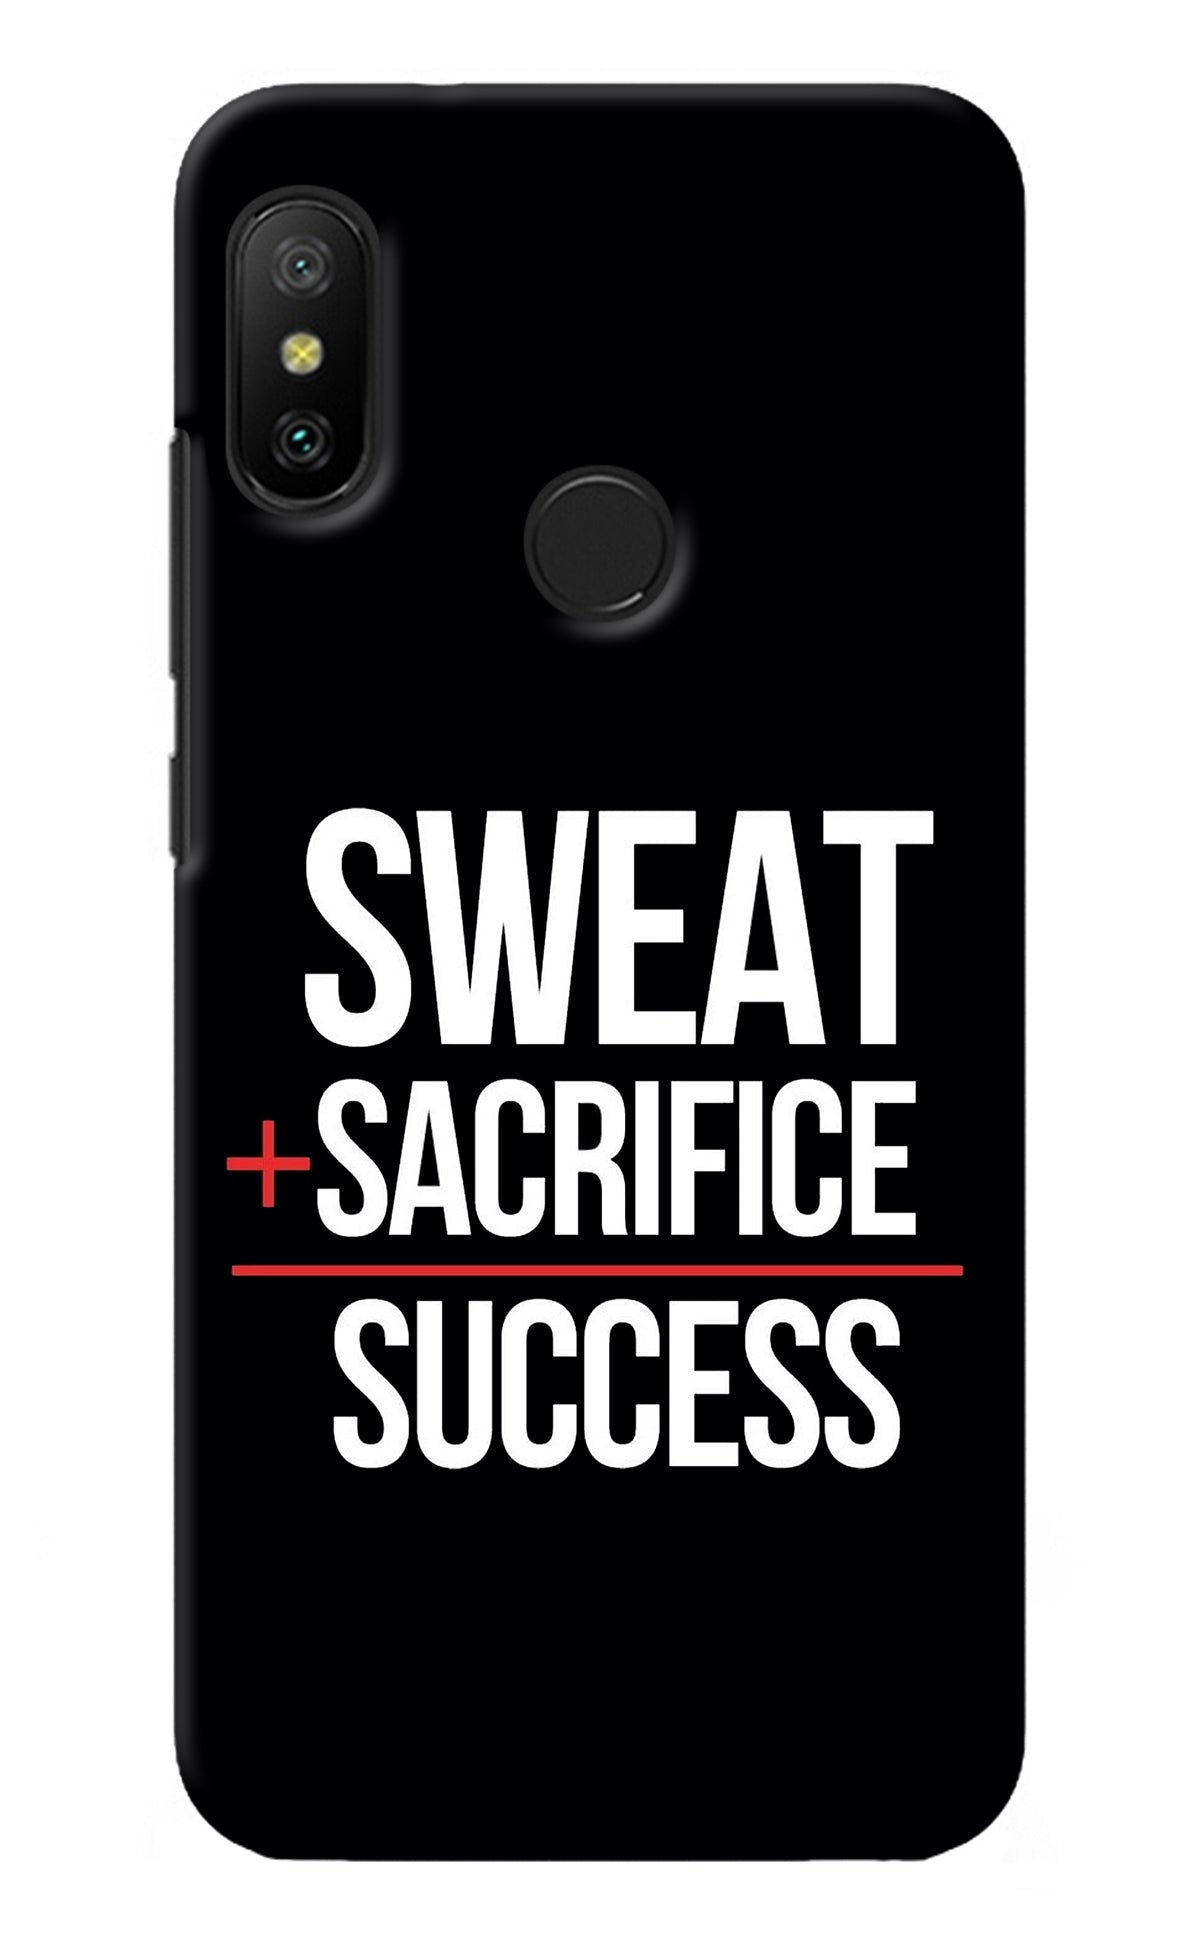 Sweat Sacrifice Success Redmi 6 Pro Back Cover